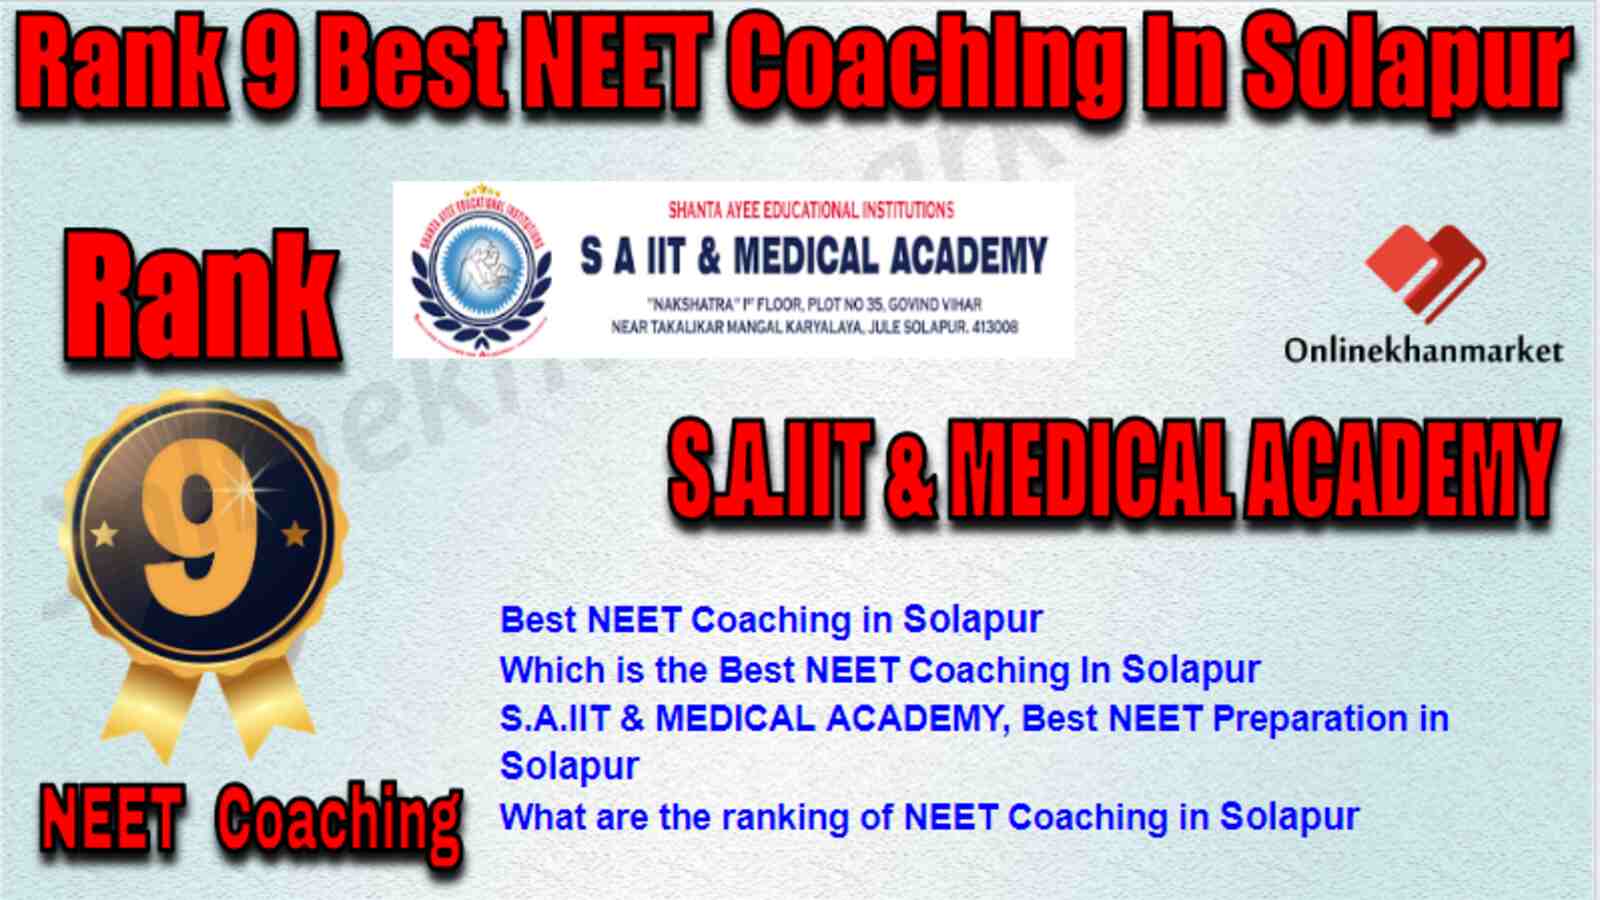 Rank 9 Best NEET Coaching in Solapur